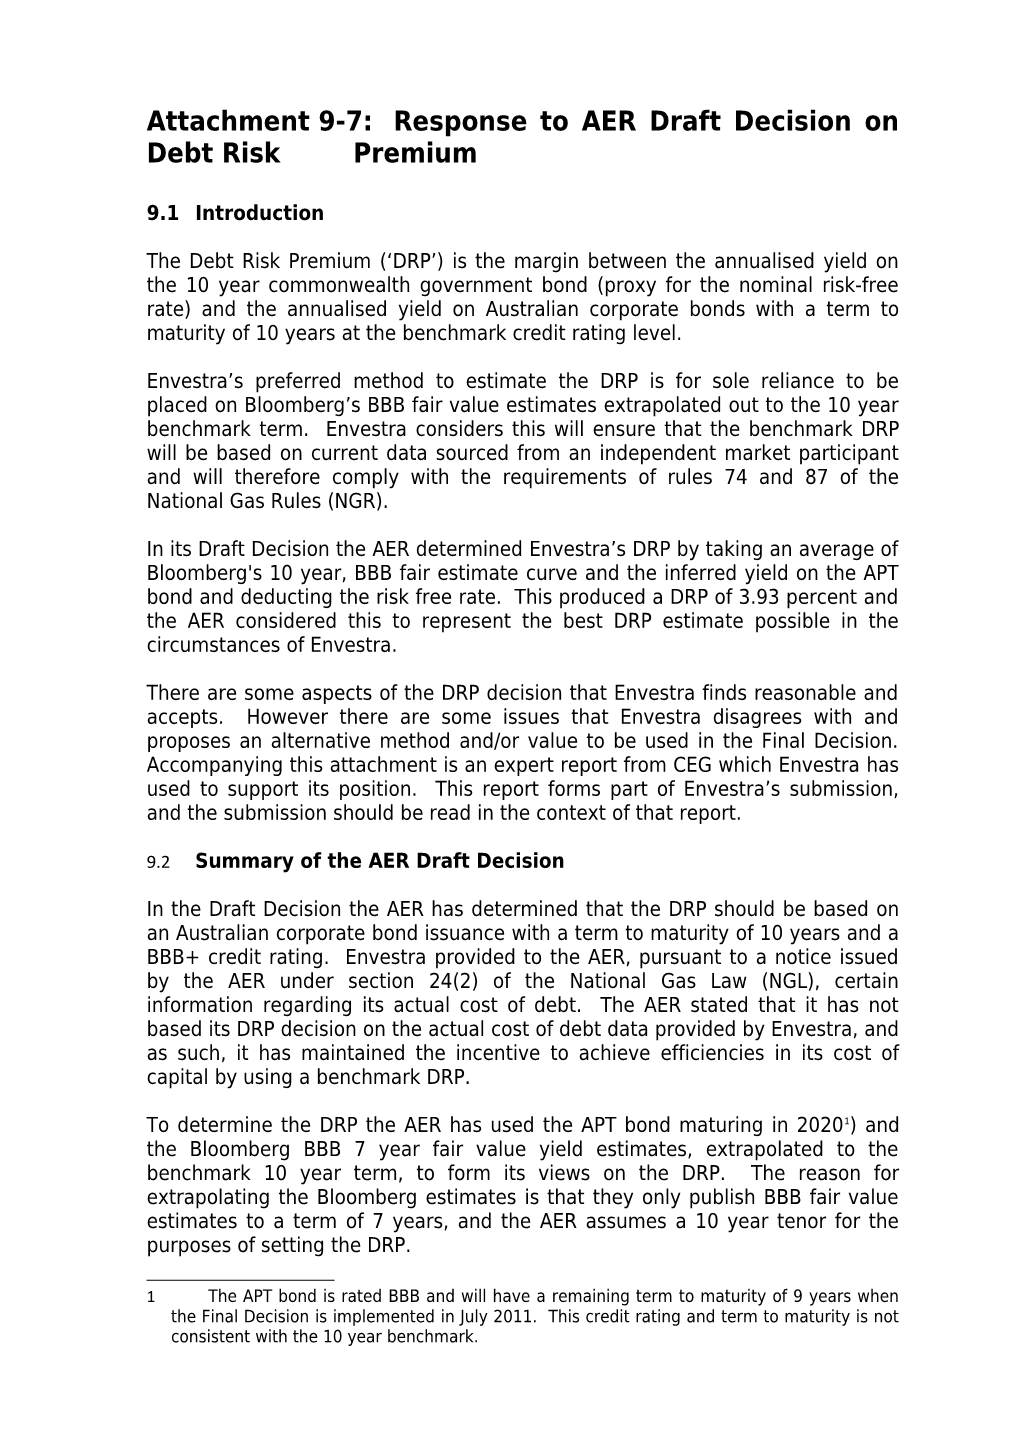 Attachment 9-7:Response to AER Draft Decision on Debt Risk Premium